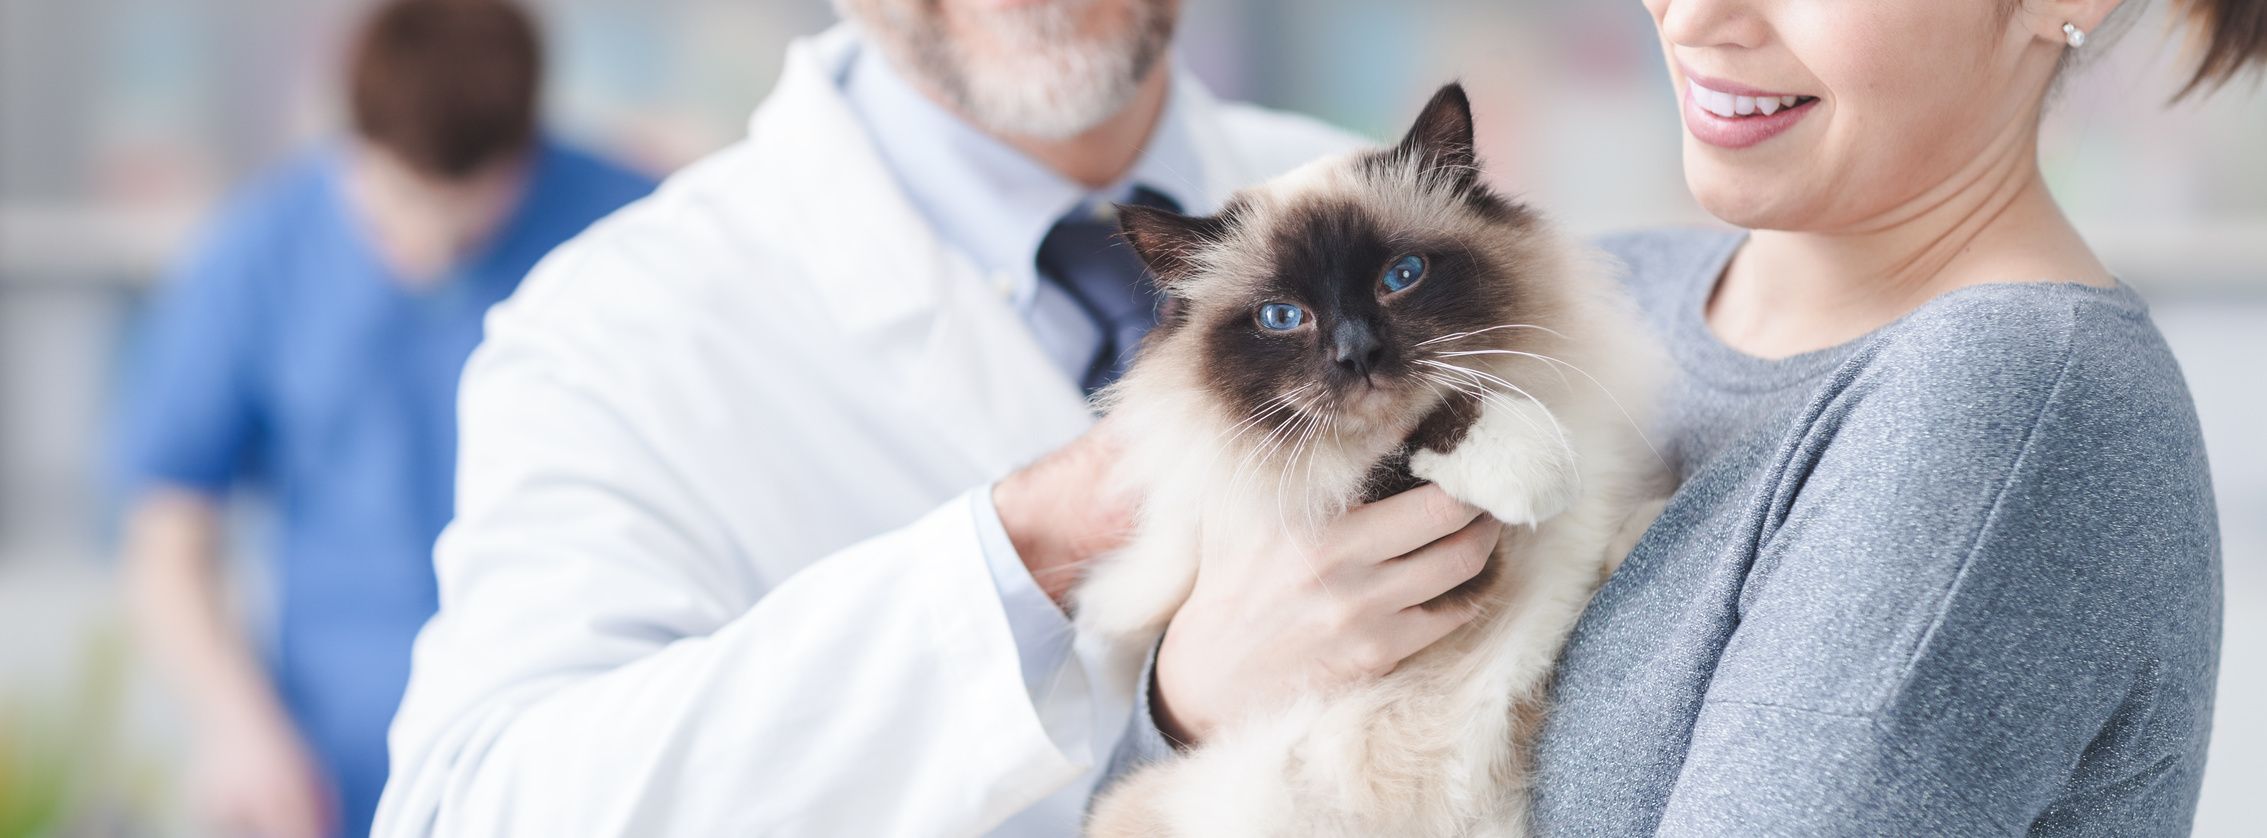 cat in a veterinary clinic